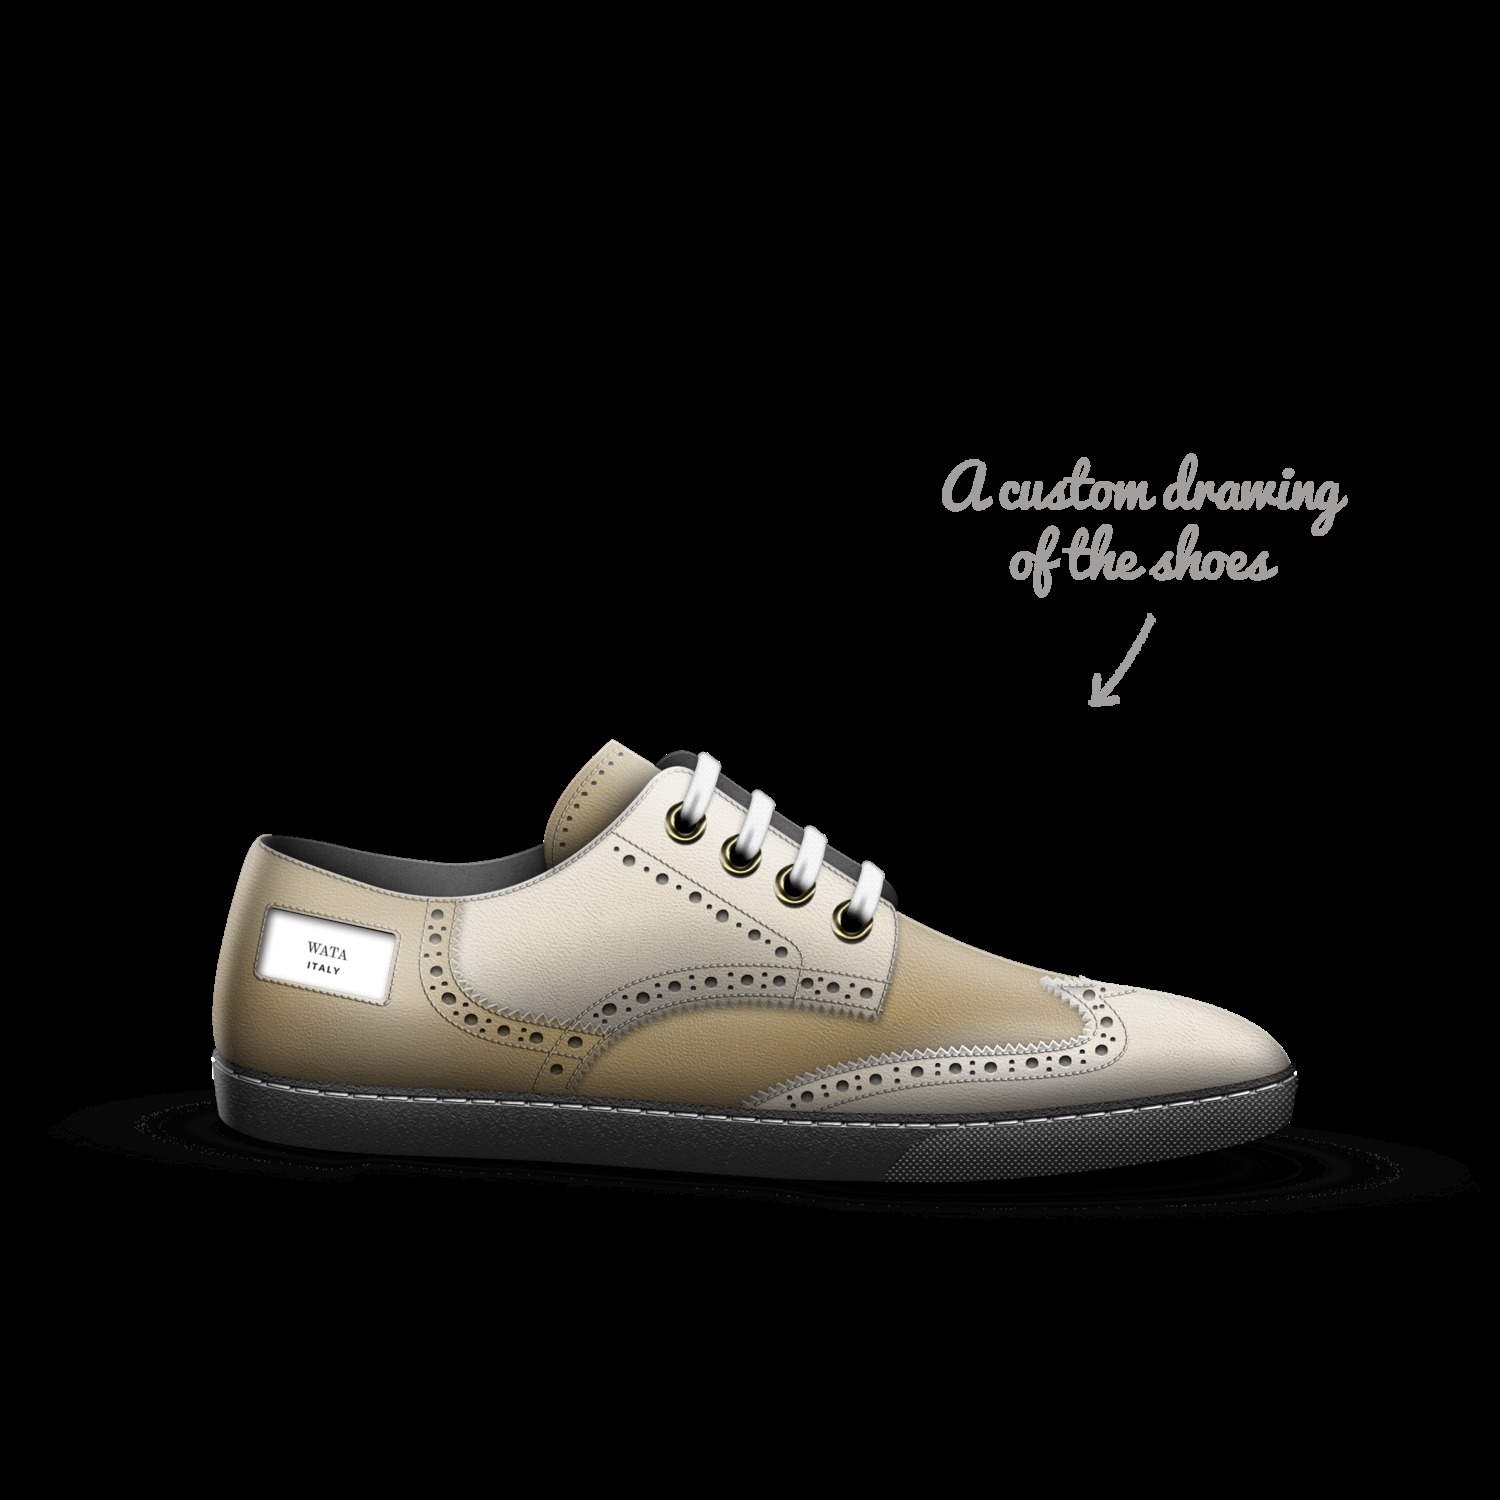 A Custom Shoe concept by Blake A Batchelor